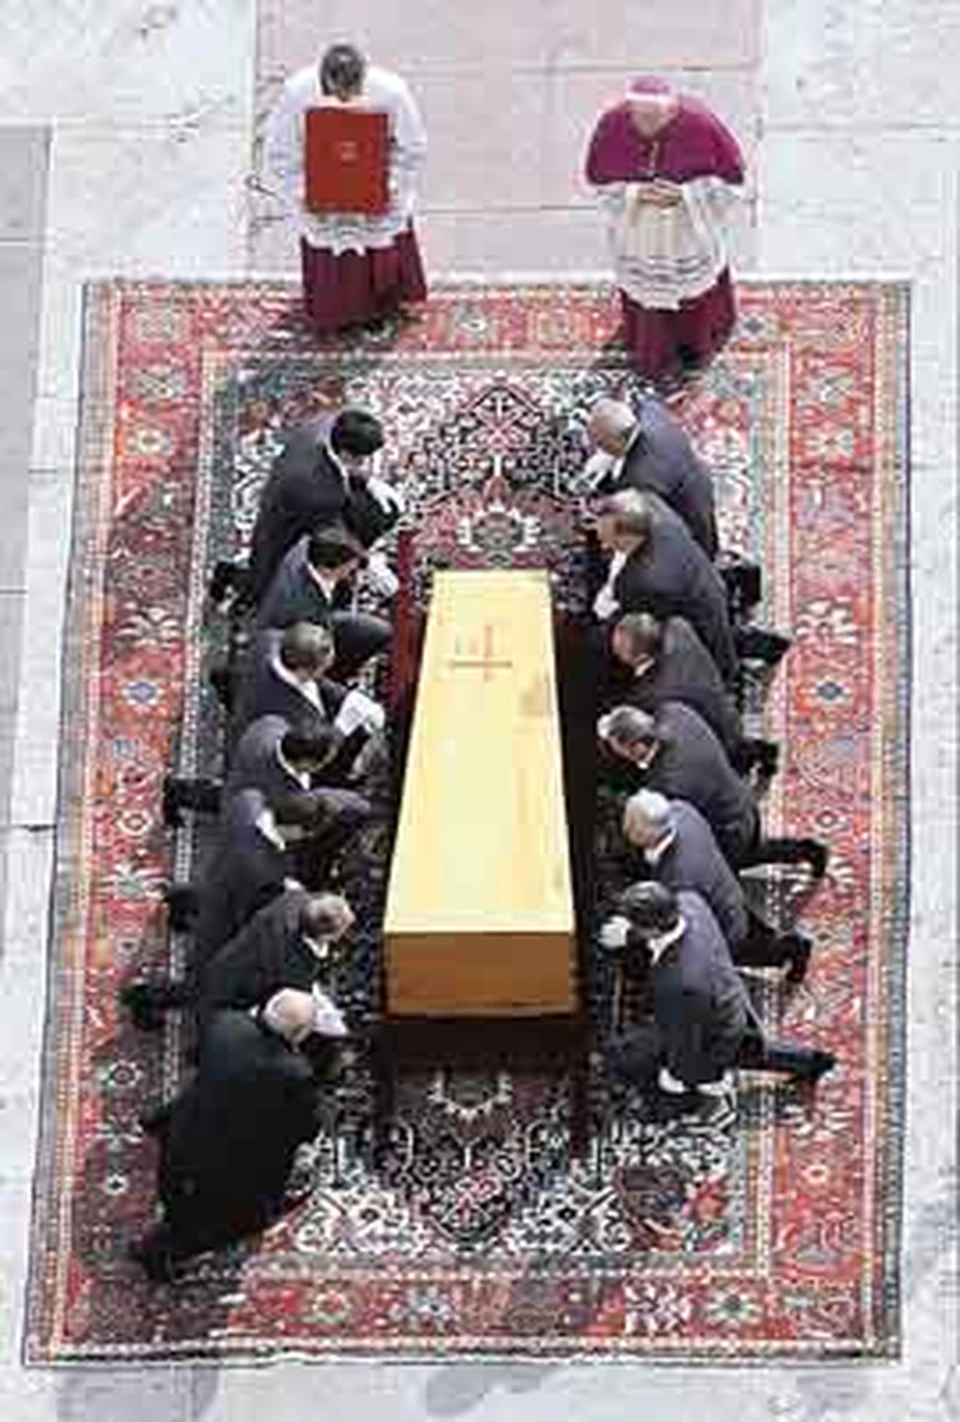 Для последнего прощания гроб с телом понтифика установили на площади перед собором Святого Петра в Ватикане.